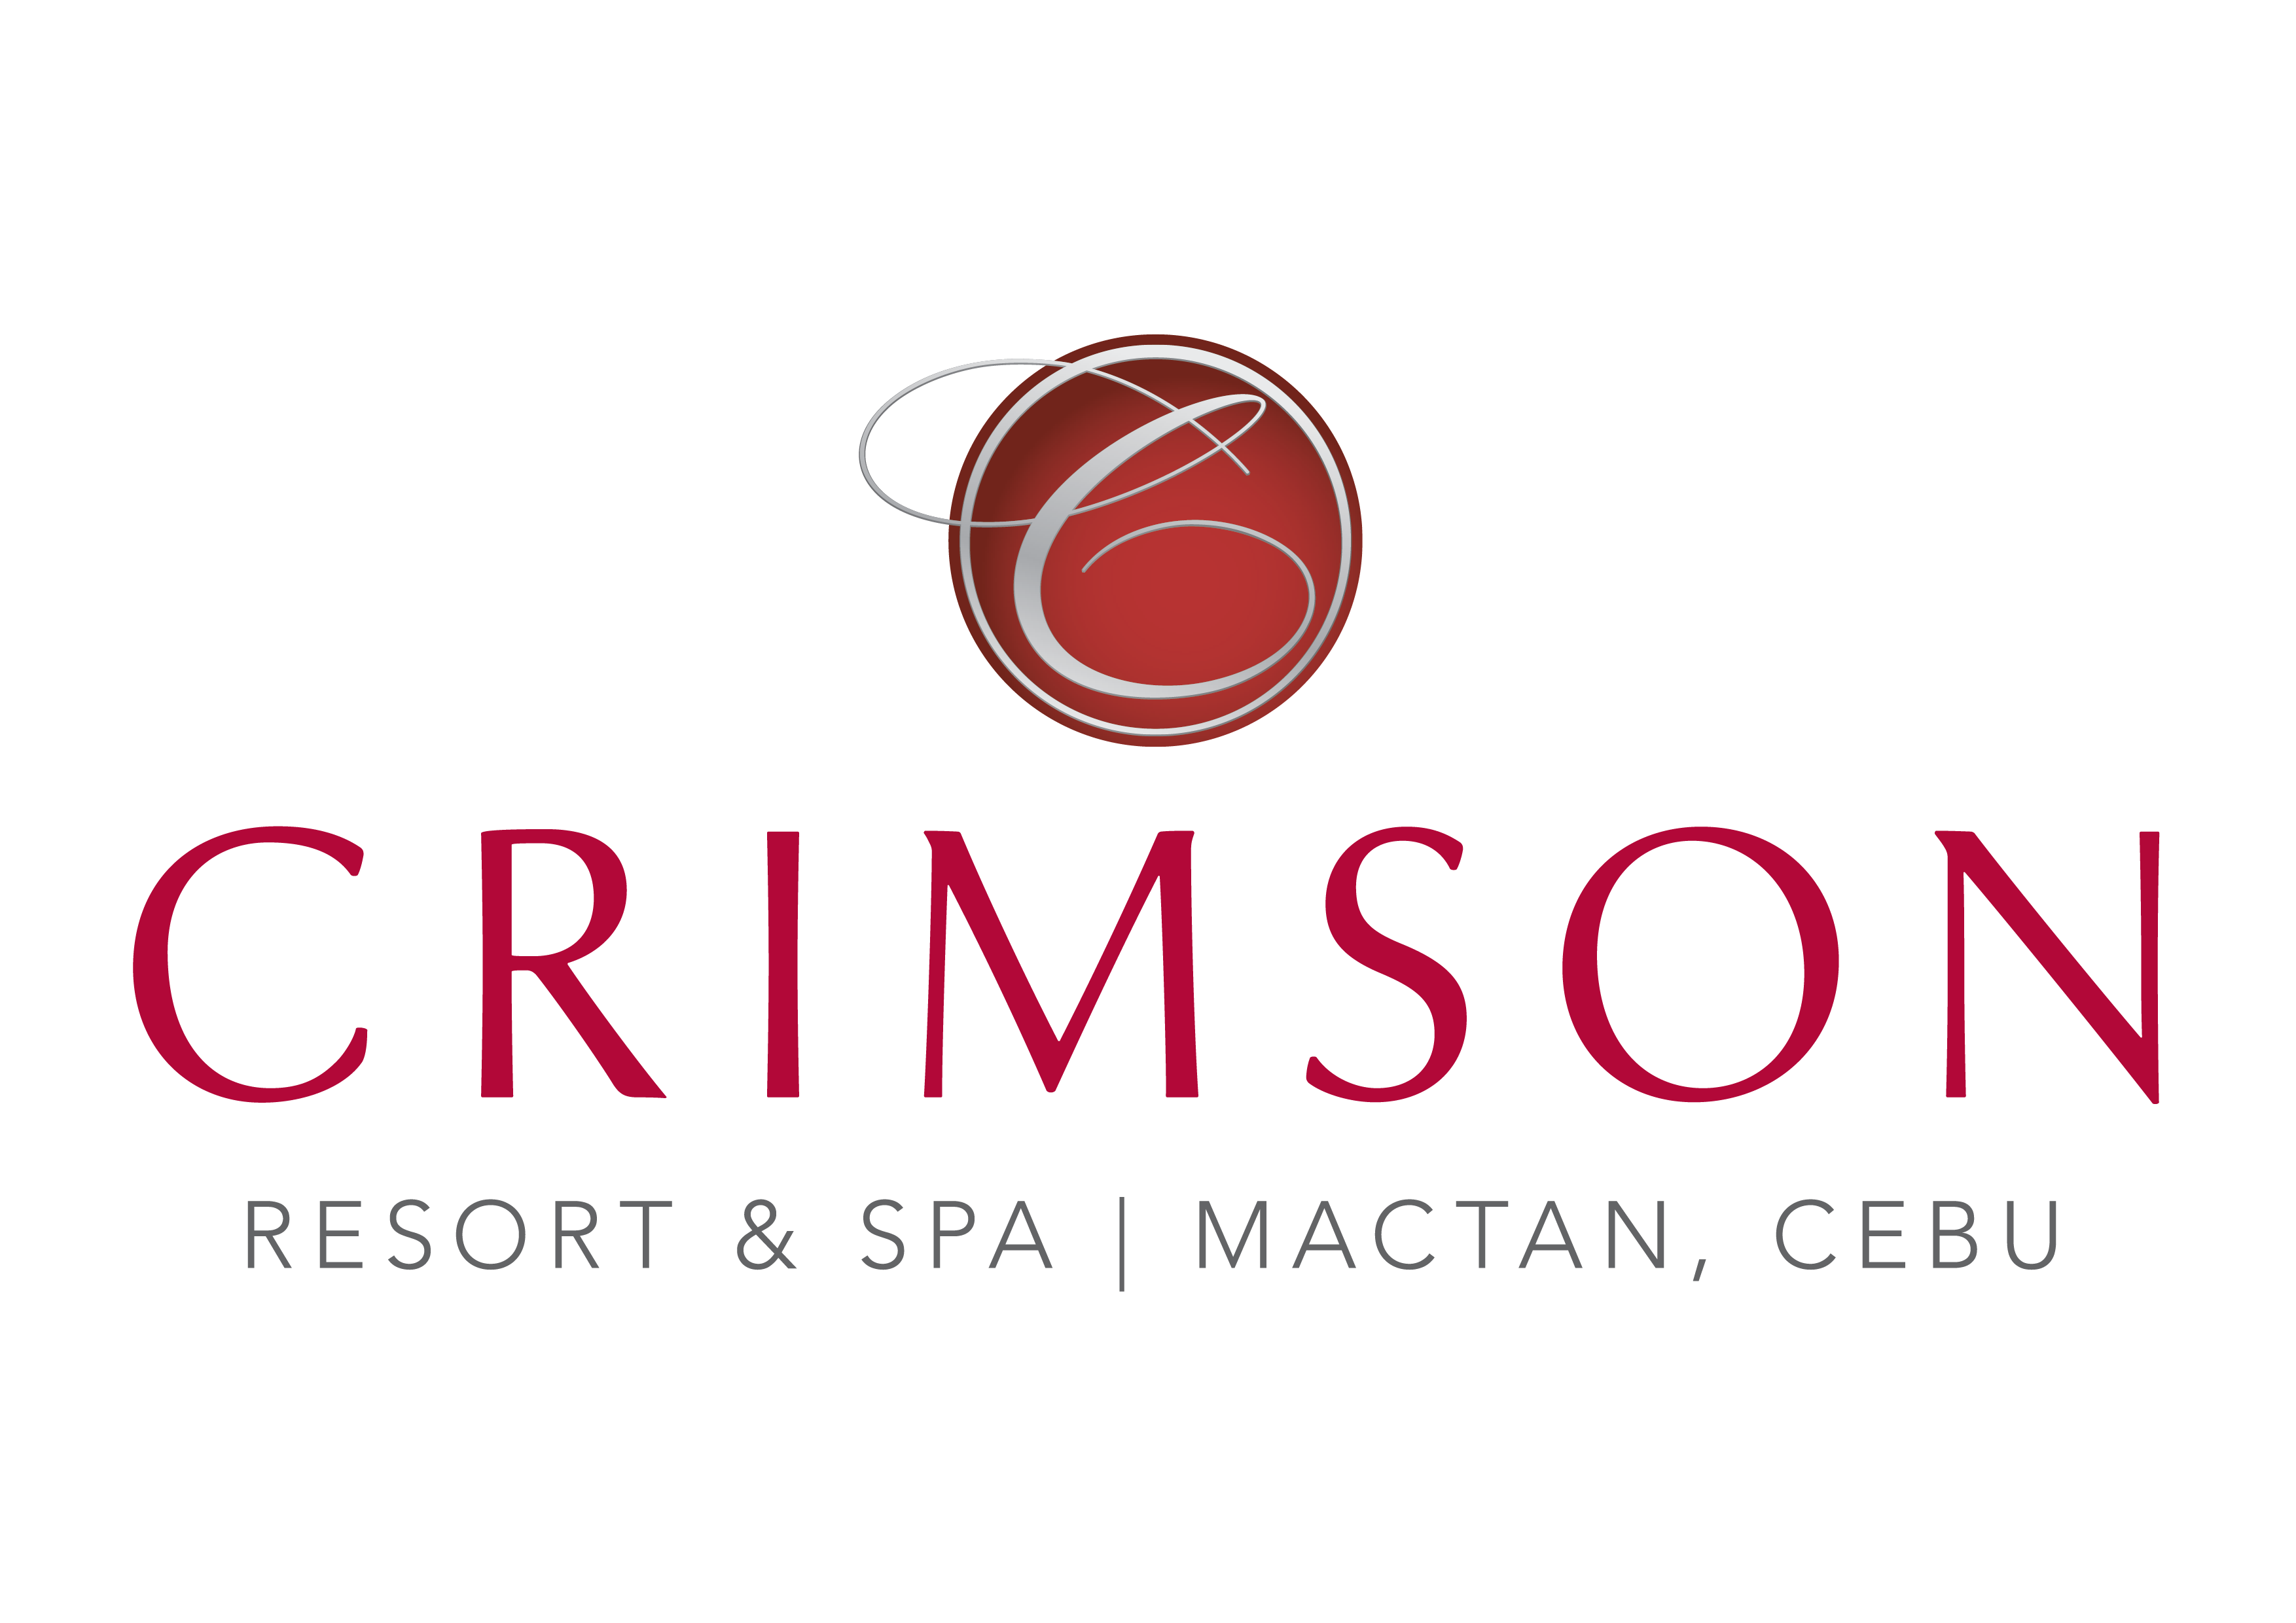 Crimson Resort & Spa | Mactan, Cebu